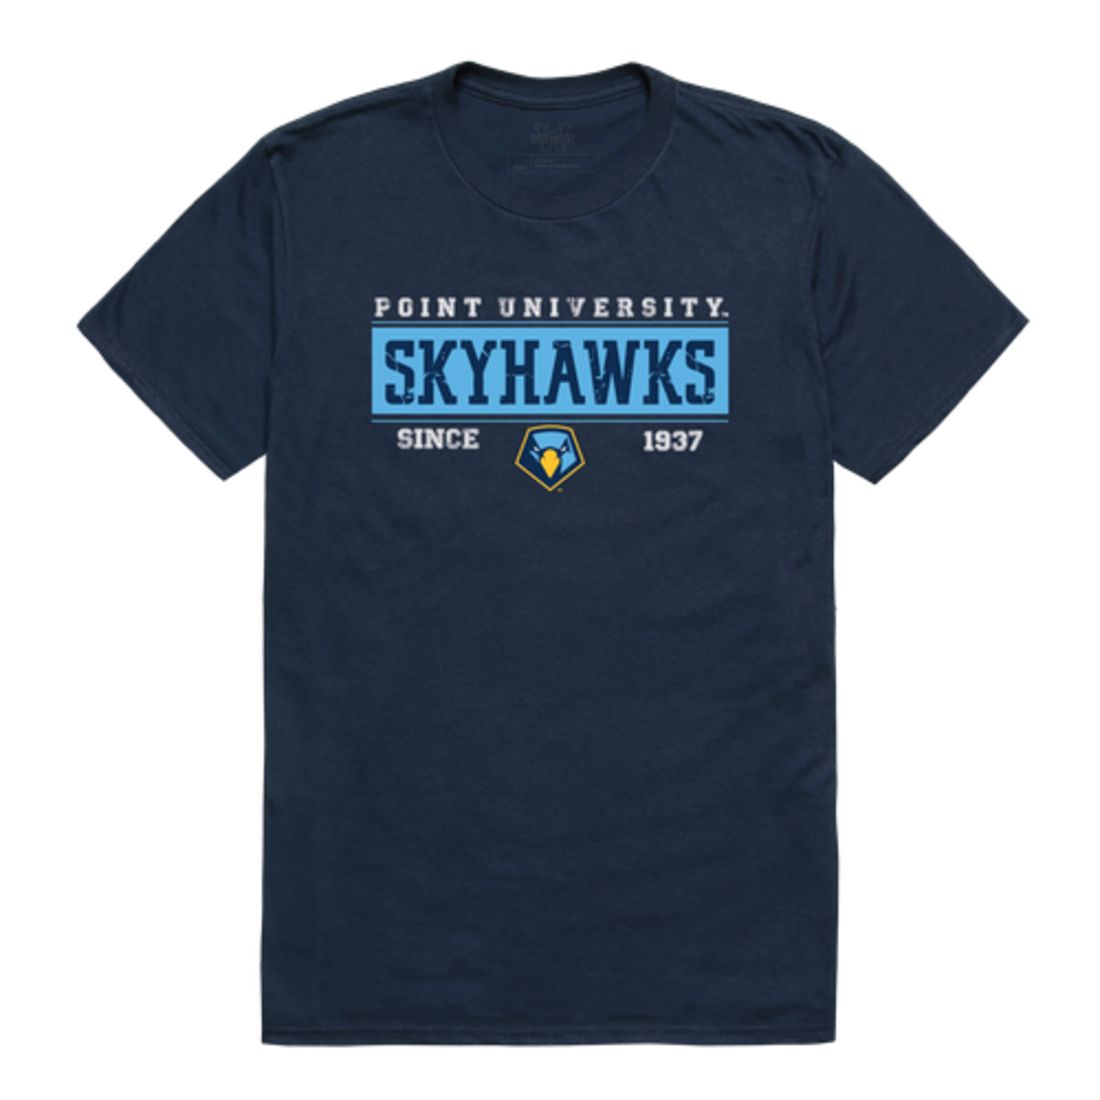 Point University Skyhawks Established T-Shirt Tee